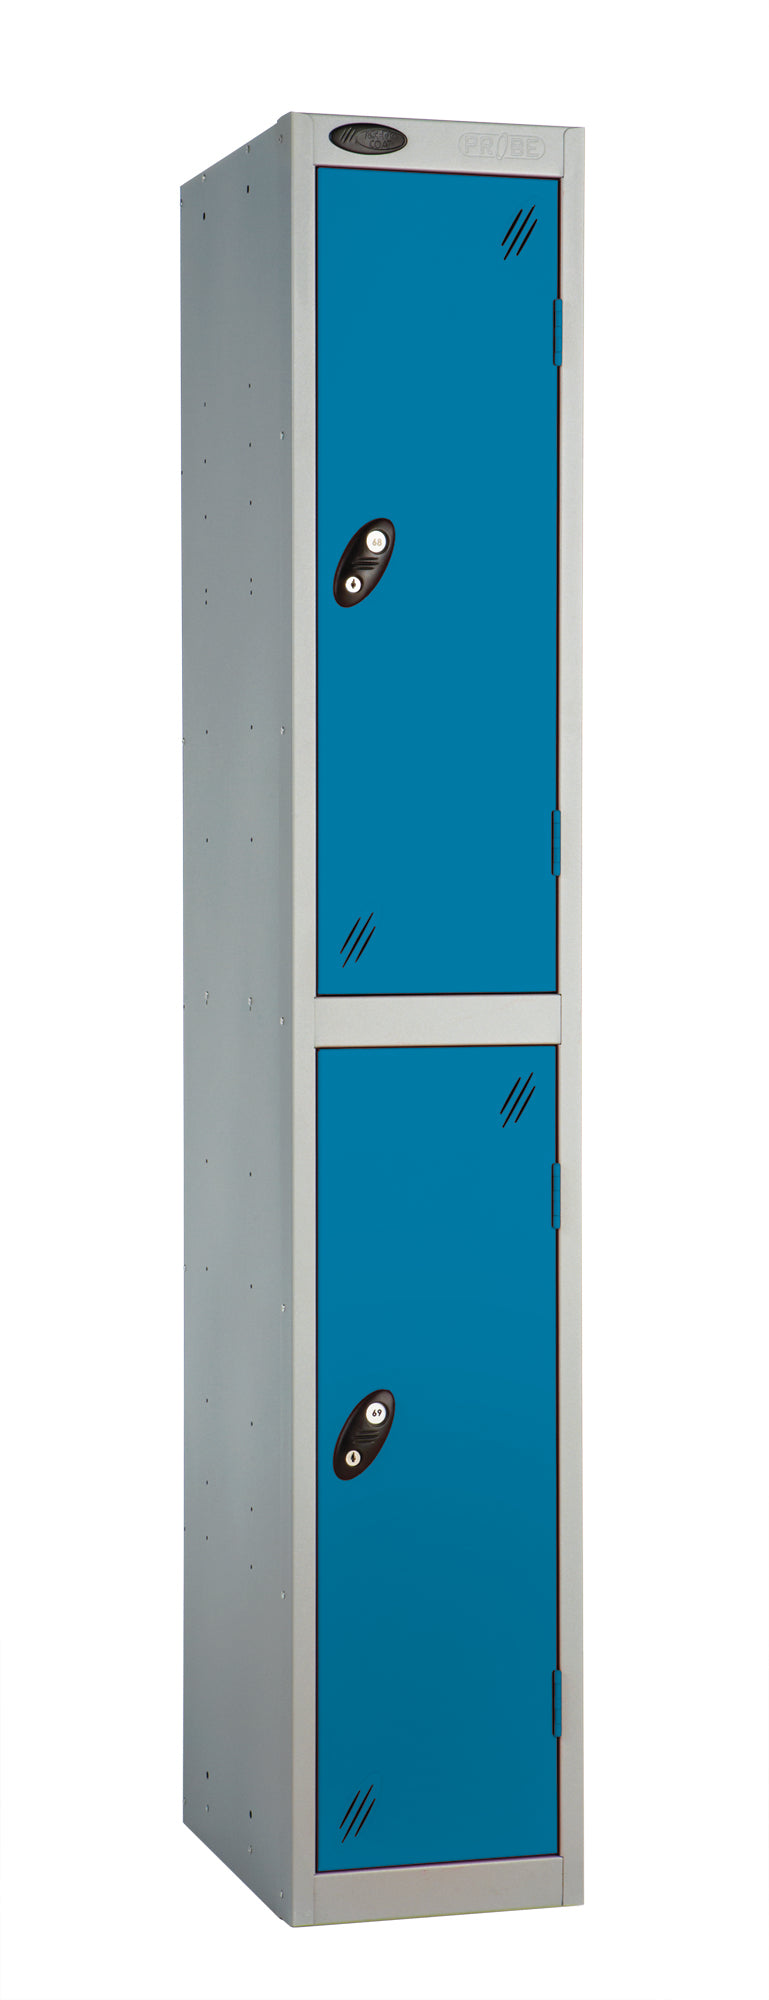 PROBEBOX STANDARD 1 NEST STEEL LOCKERS - ELECTRIC BLUE 2 DOOR Storage Lockers > Lockers > Cabinets > Storage > Probe > One Stop For Safety   